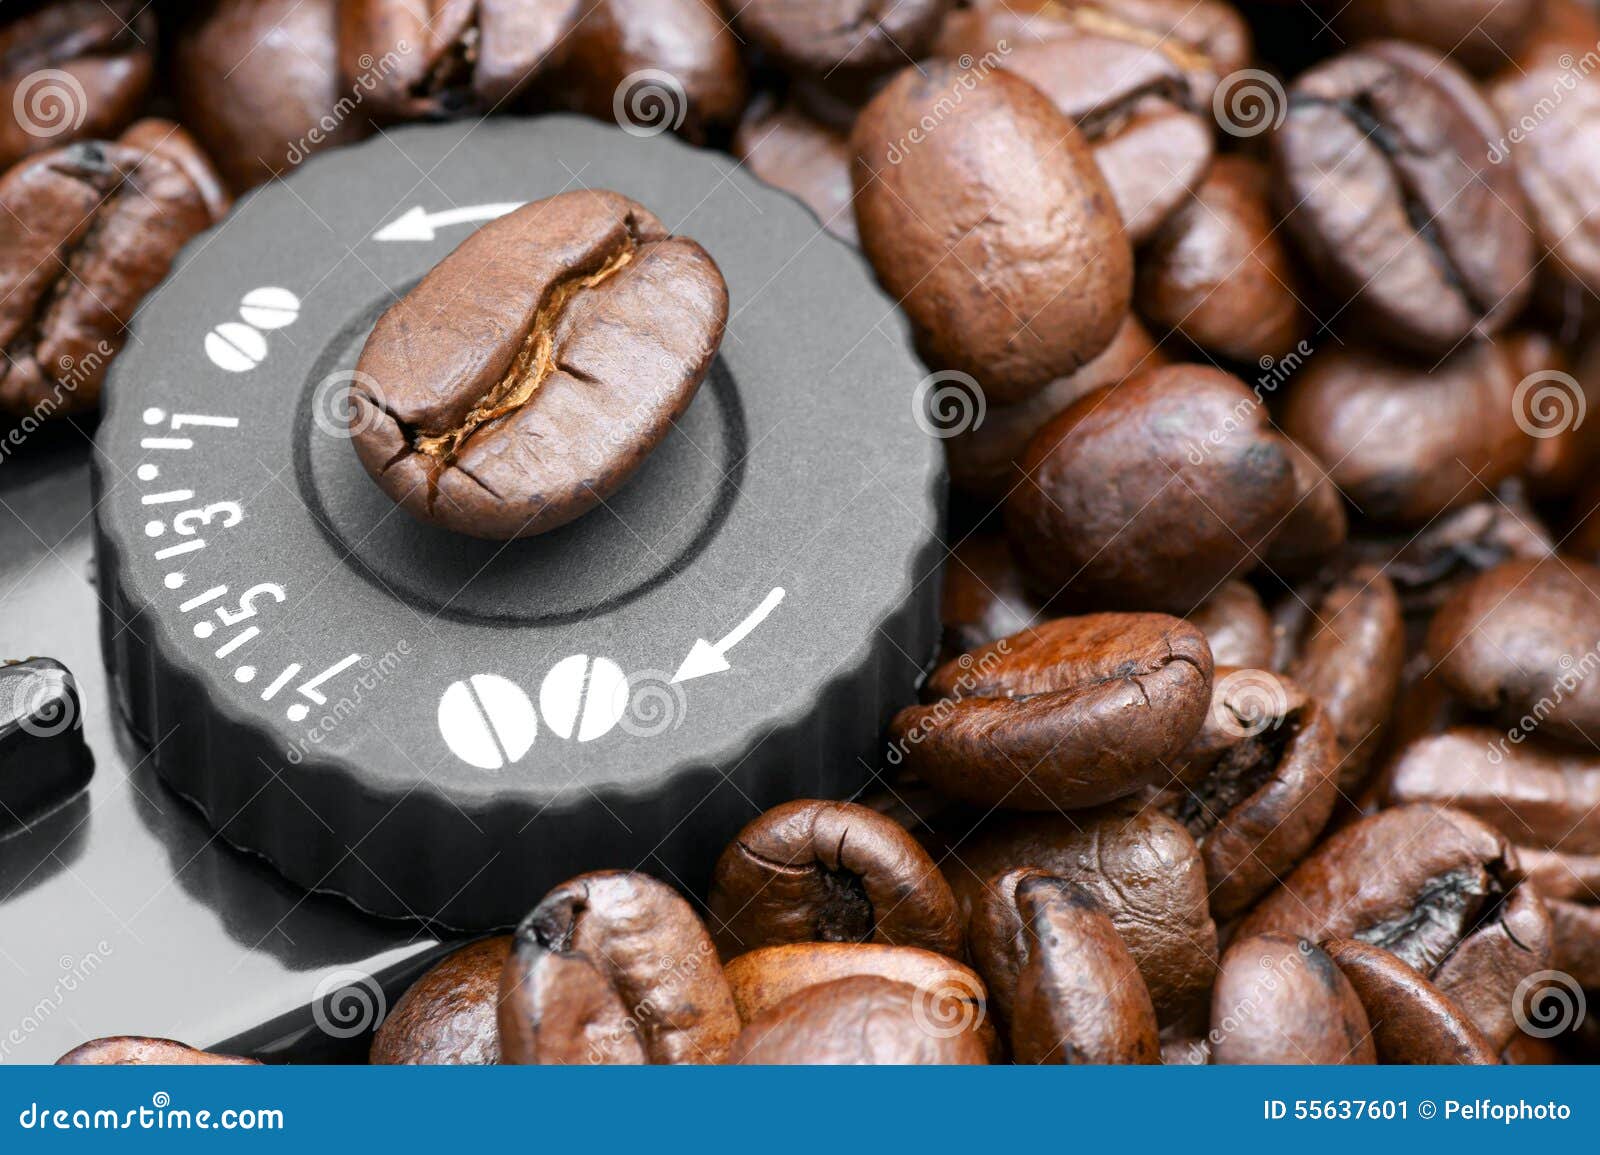 setting grind coffee.